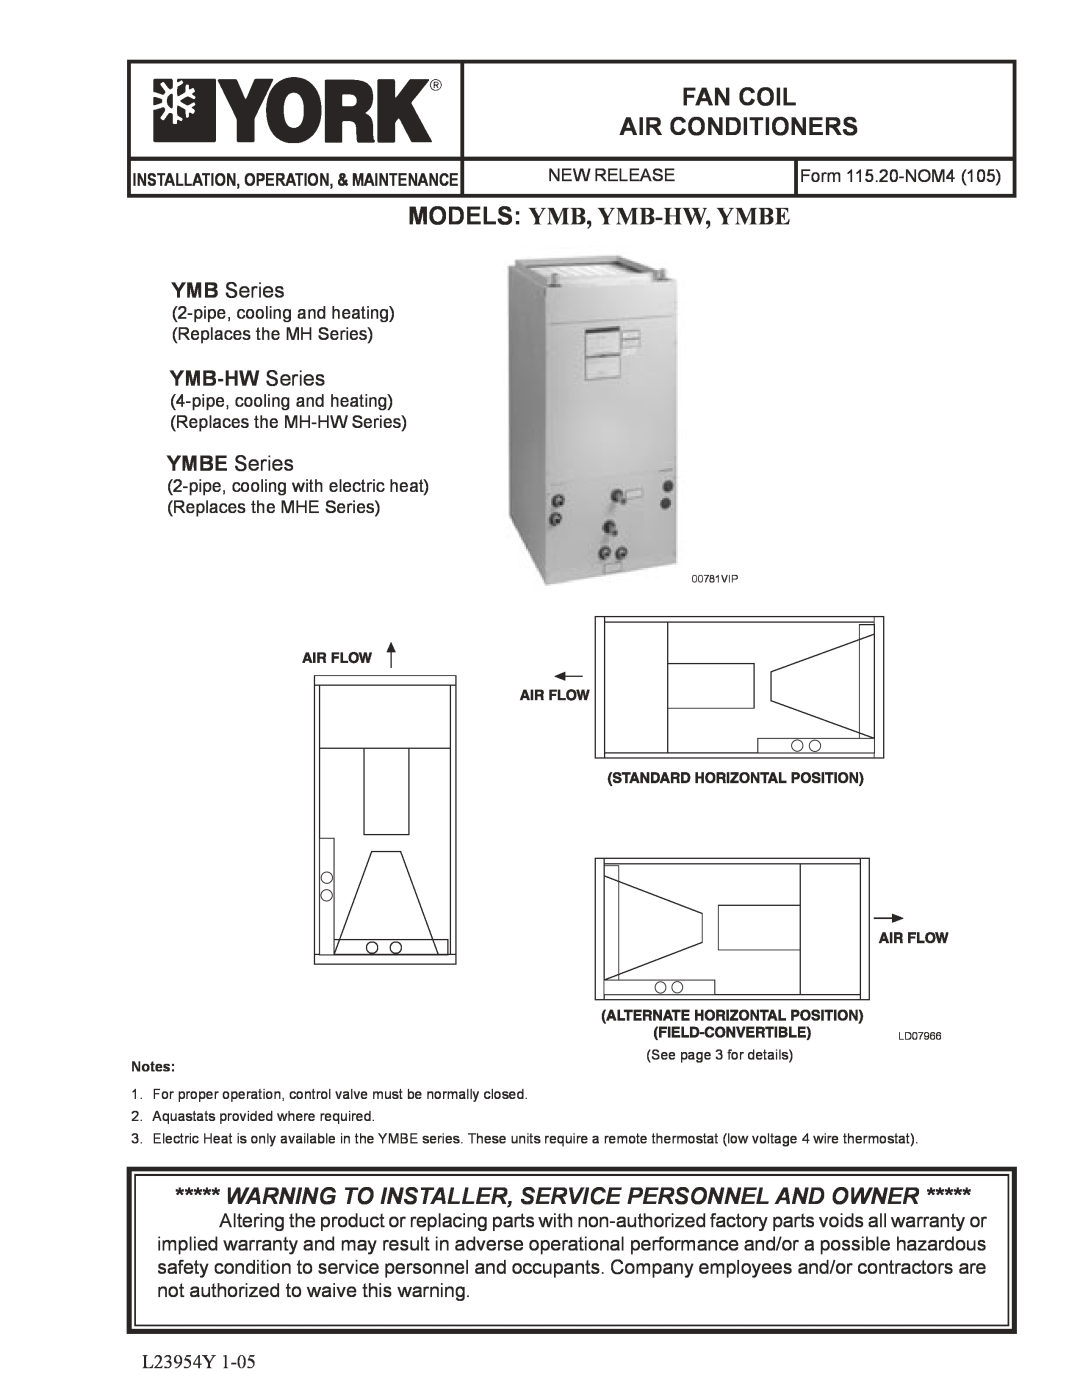 York warranty Fan Coil Air Conditioners, YMB-HW Series, Models Ymb, Ymb-Hw,Ymbe, YMB Series, YMBE Series 